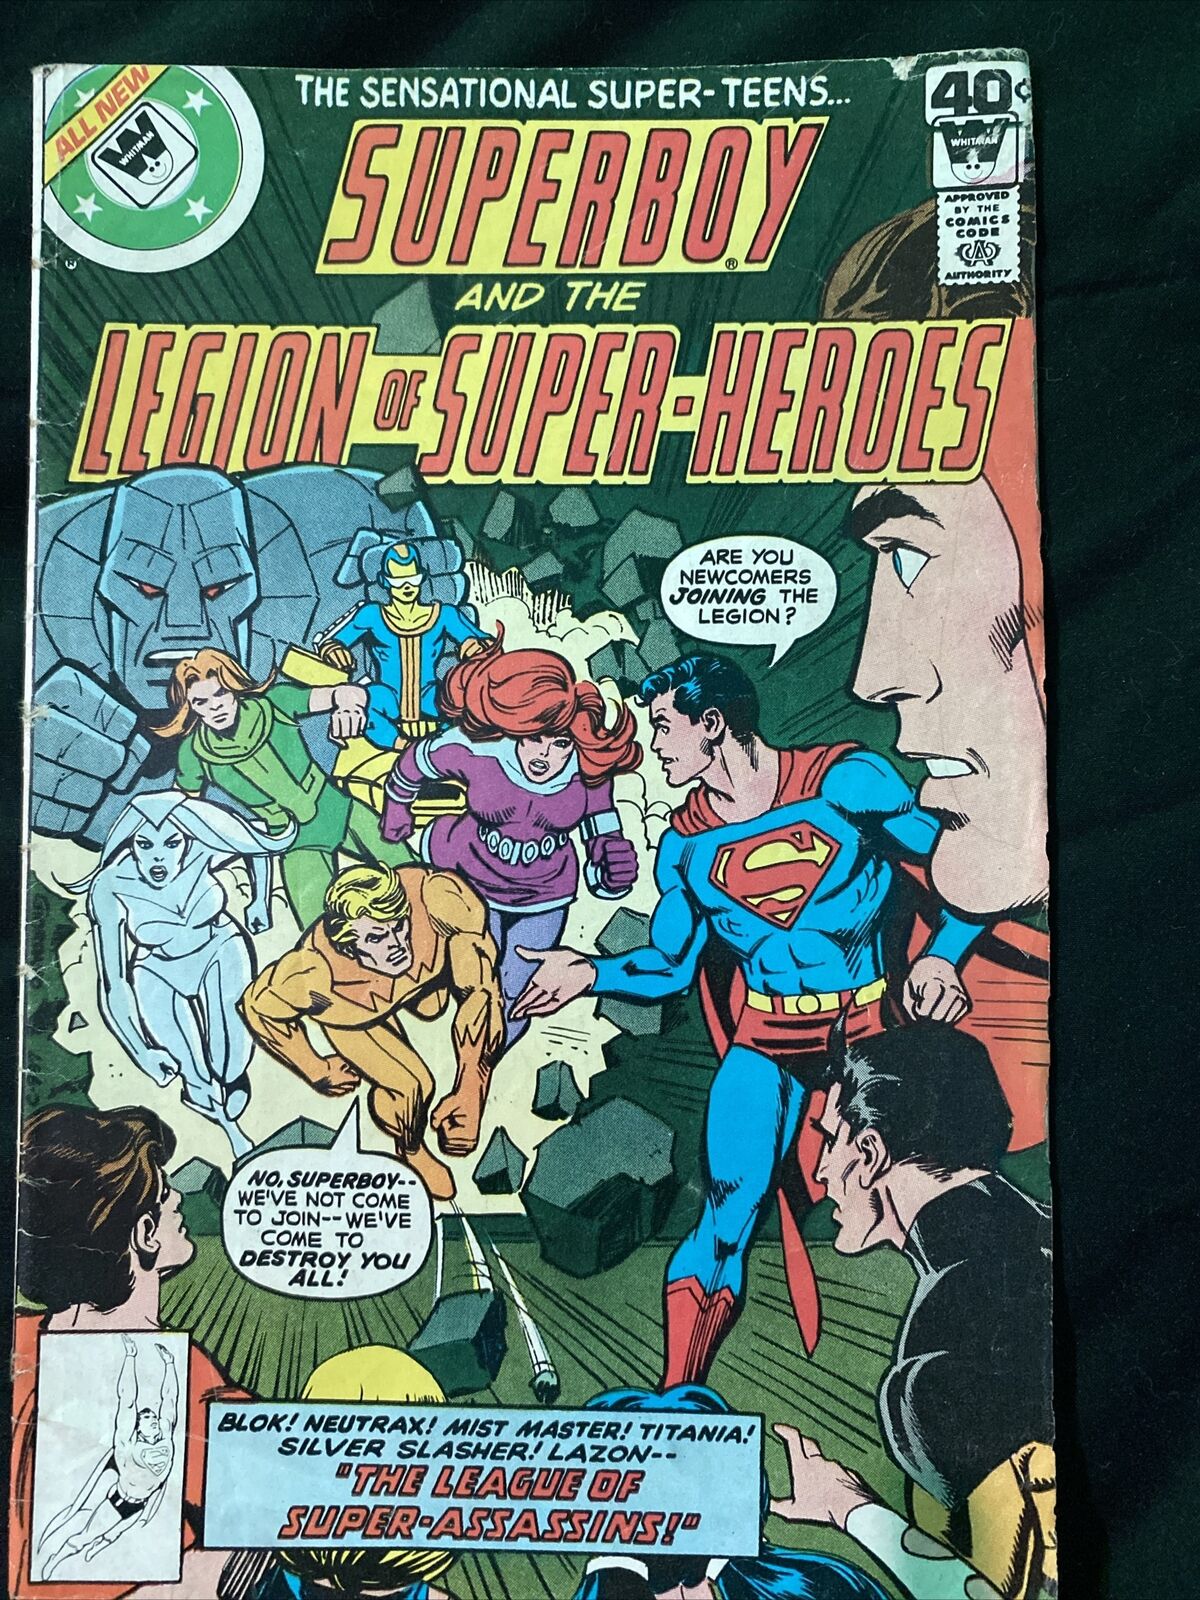 The Sensational Super Teens Superboy And The Legion Of Super Hero’s 